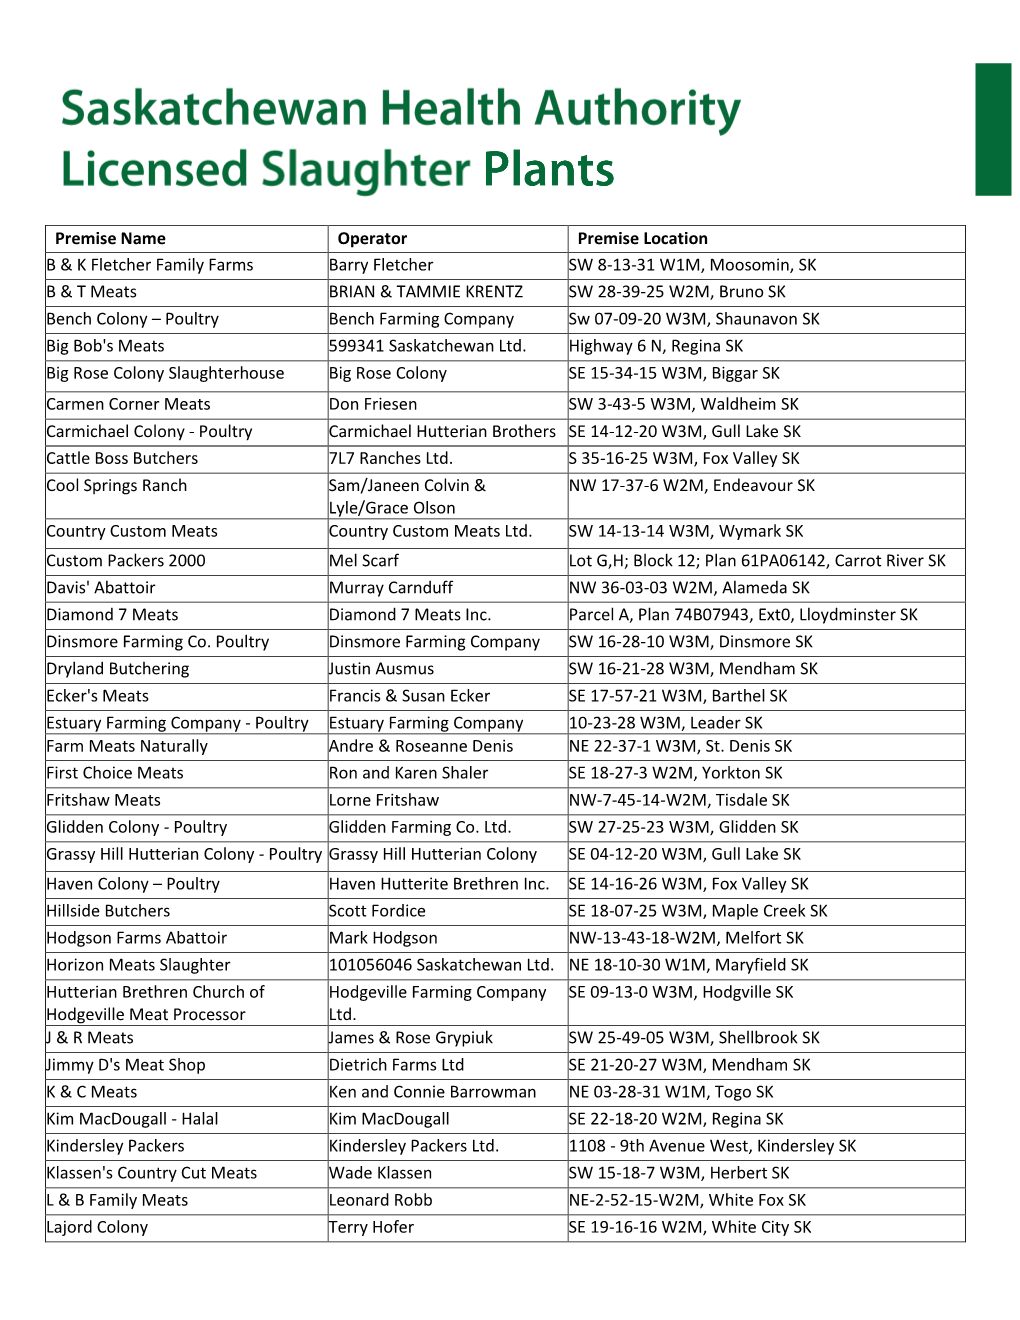 Saskatchewan Health Authority Licensed Slaughter Plants